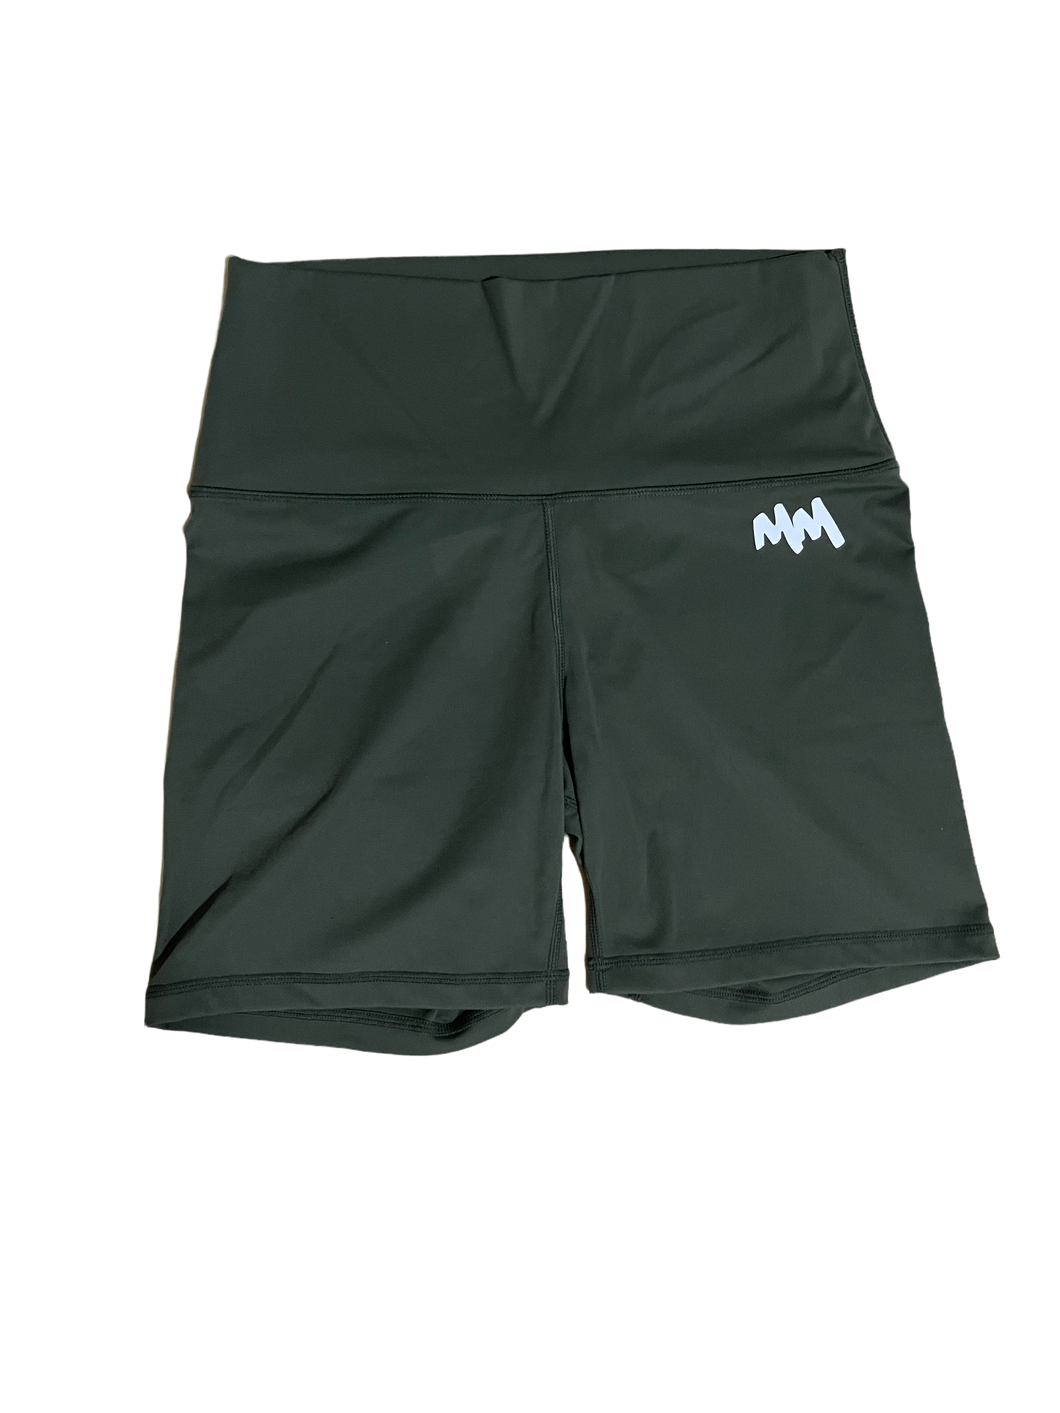 MM | Ultra Soft High Raise Shorts | Army Green